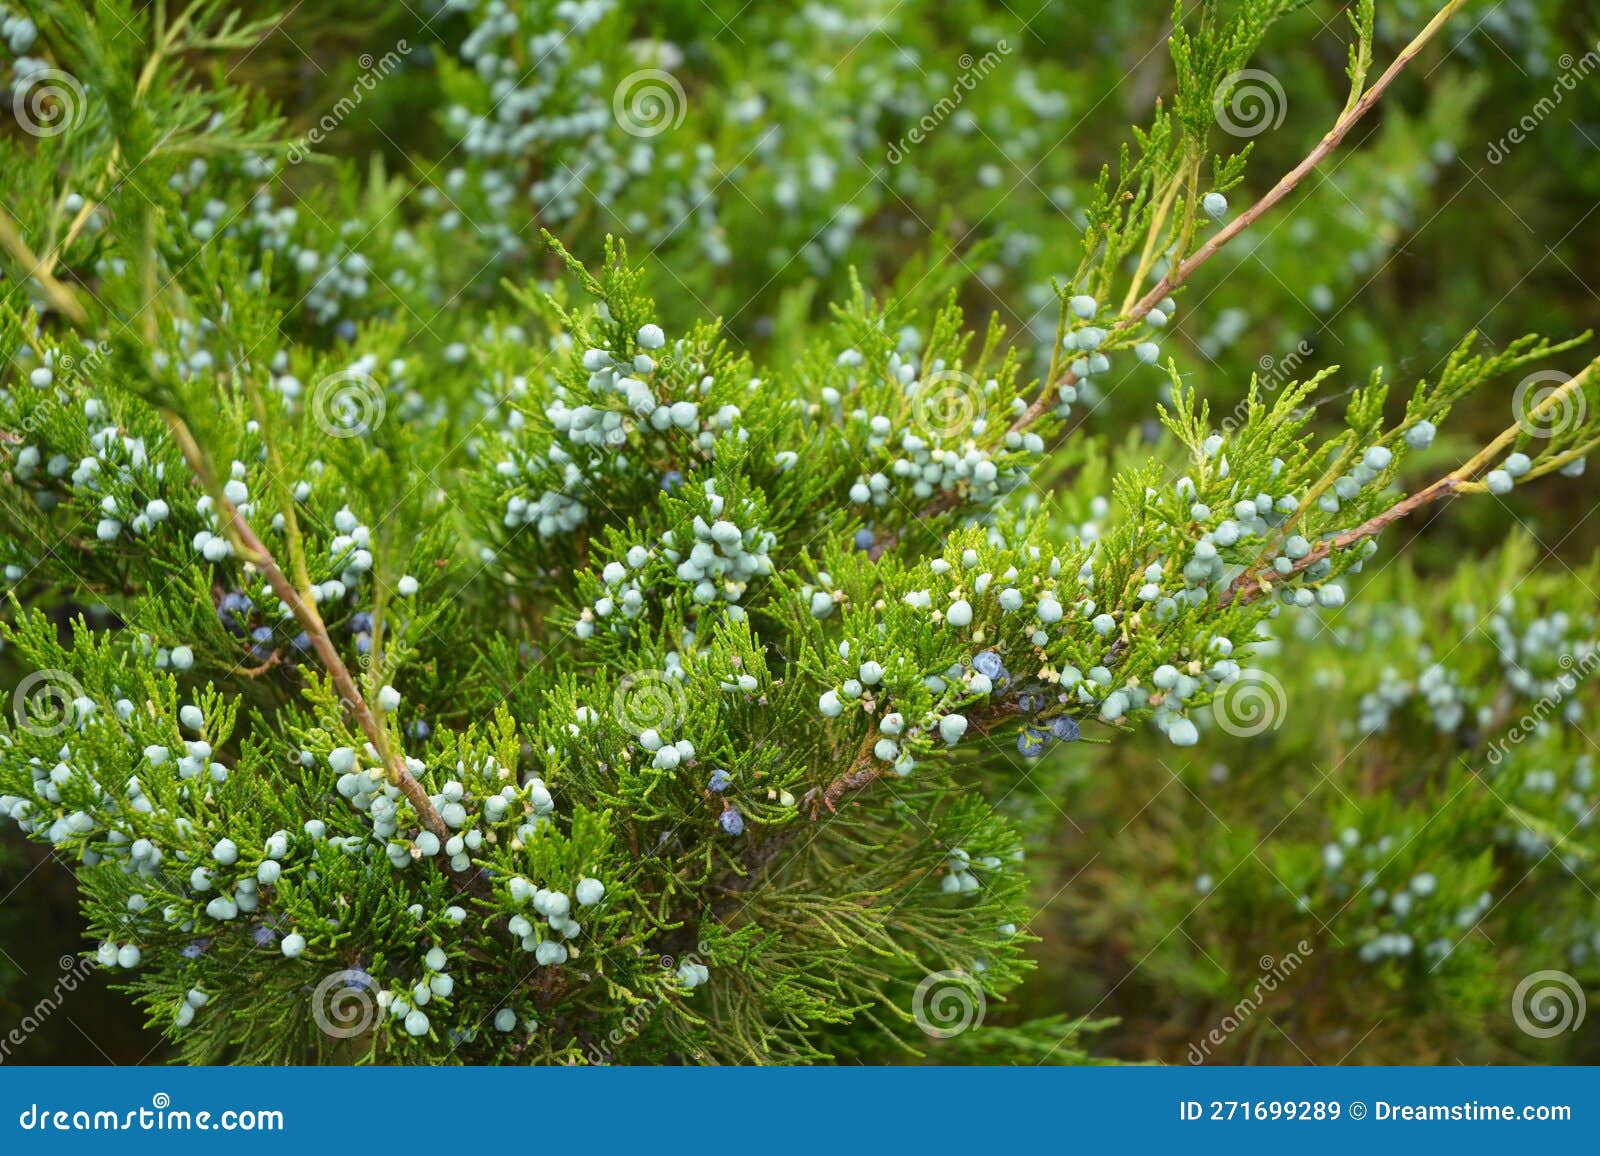 juniperus virginiana foliage and mature cones. eastern red cedar, juniperus virginiana, tree seeds